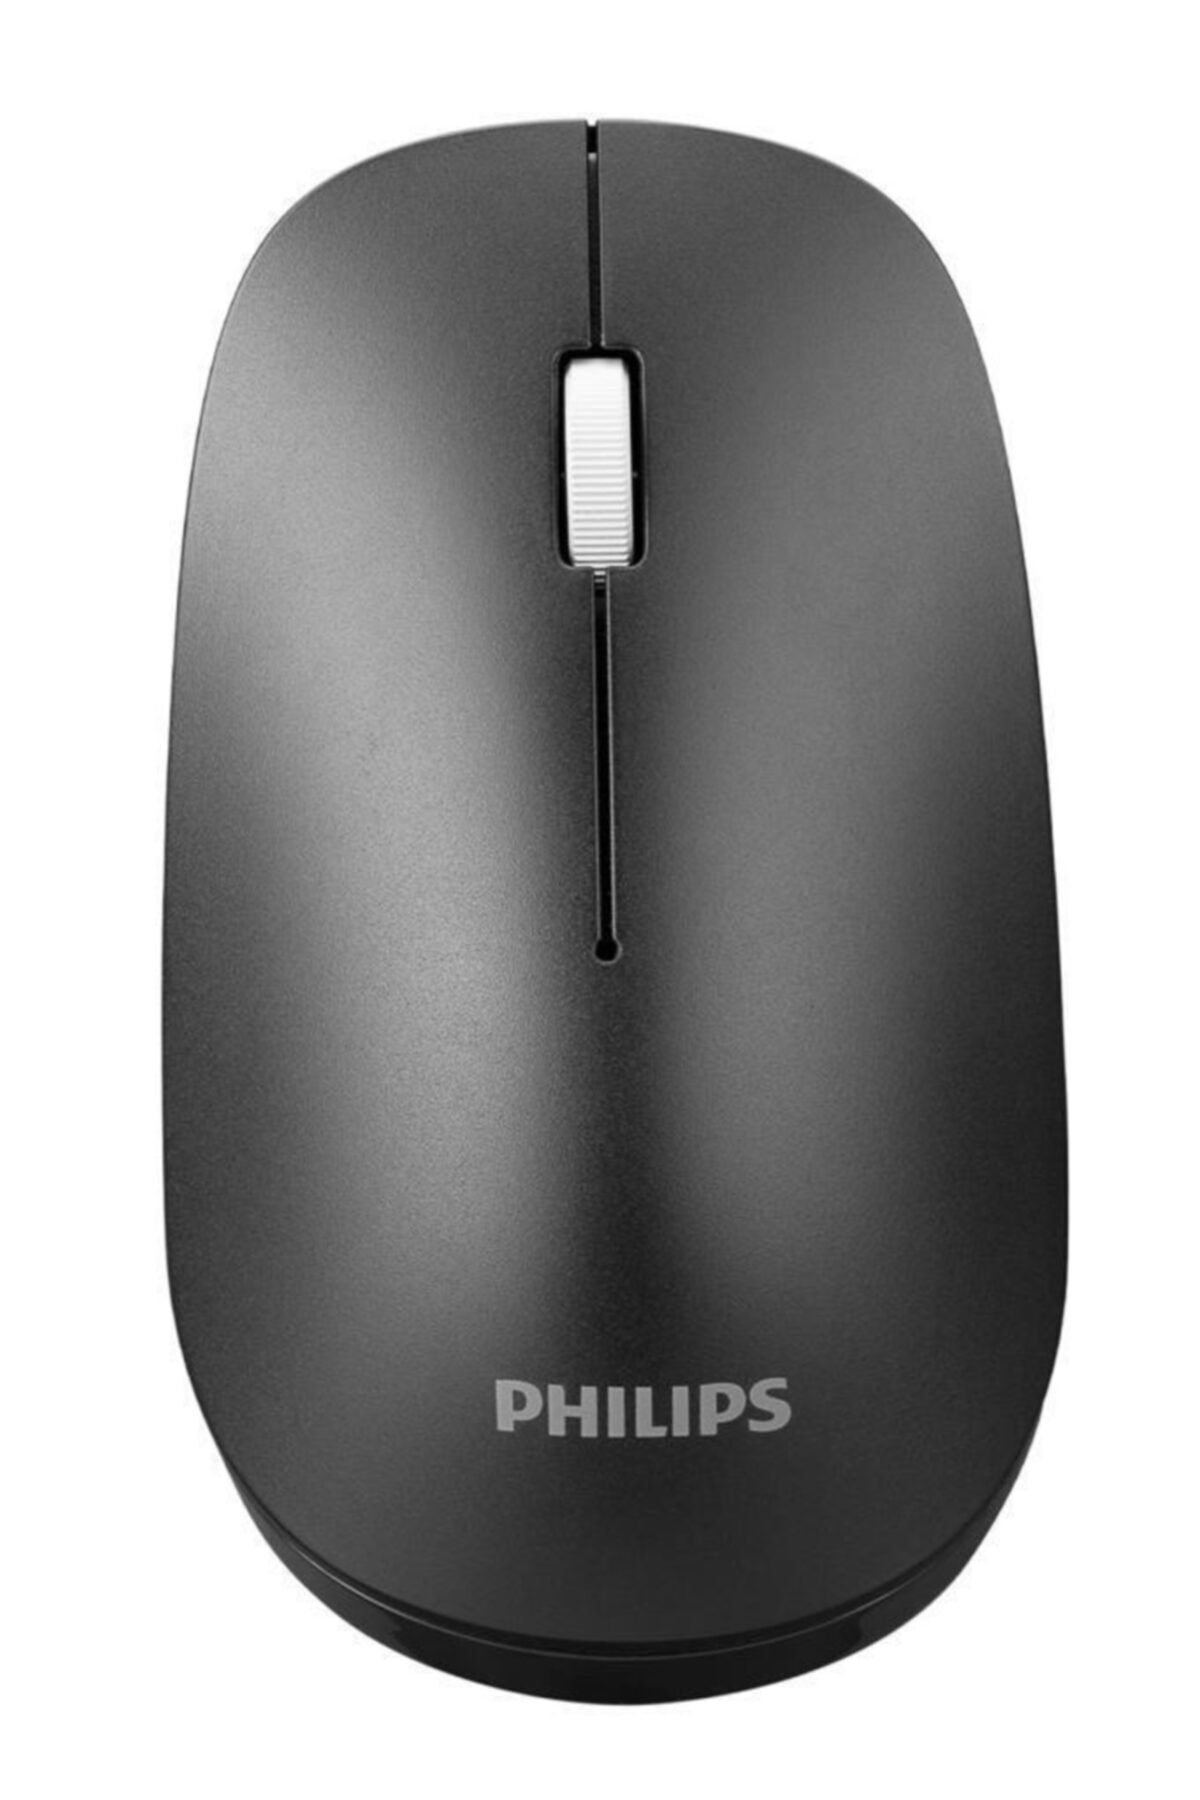 Philips M305 Spk7305 Şarj Edilebilir 1600 Dpi Kablosuz Mouse Siyah